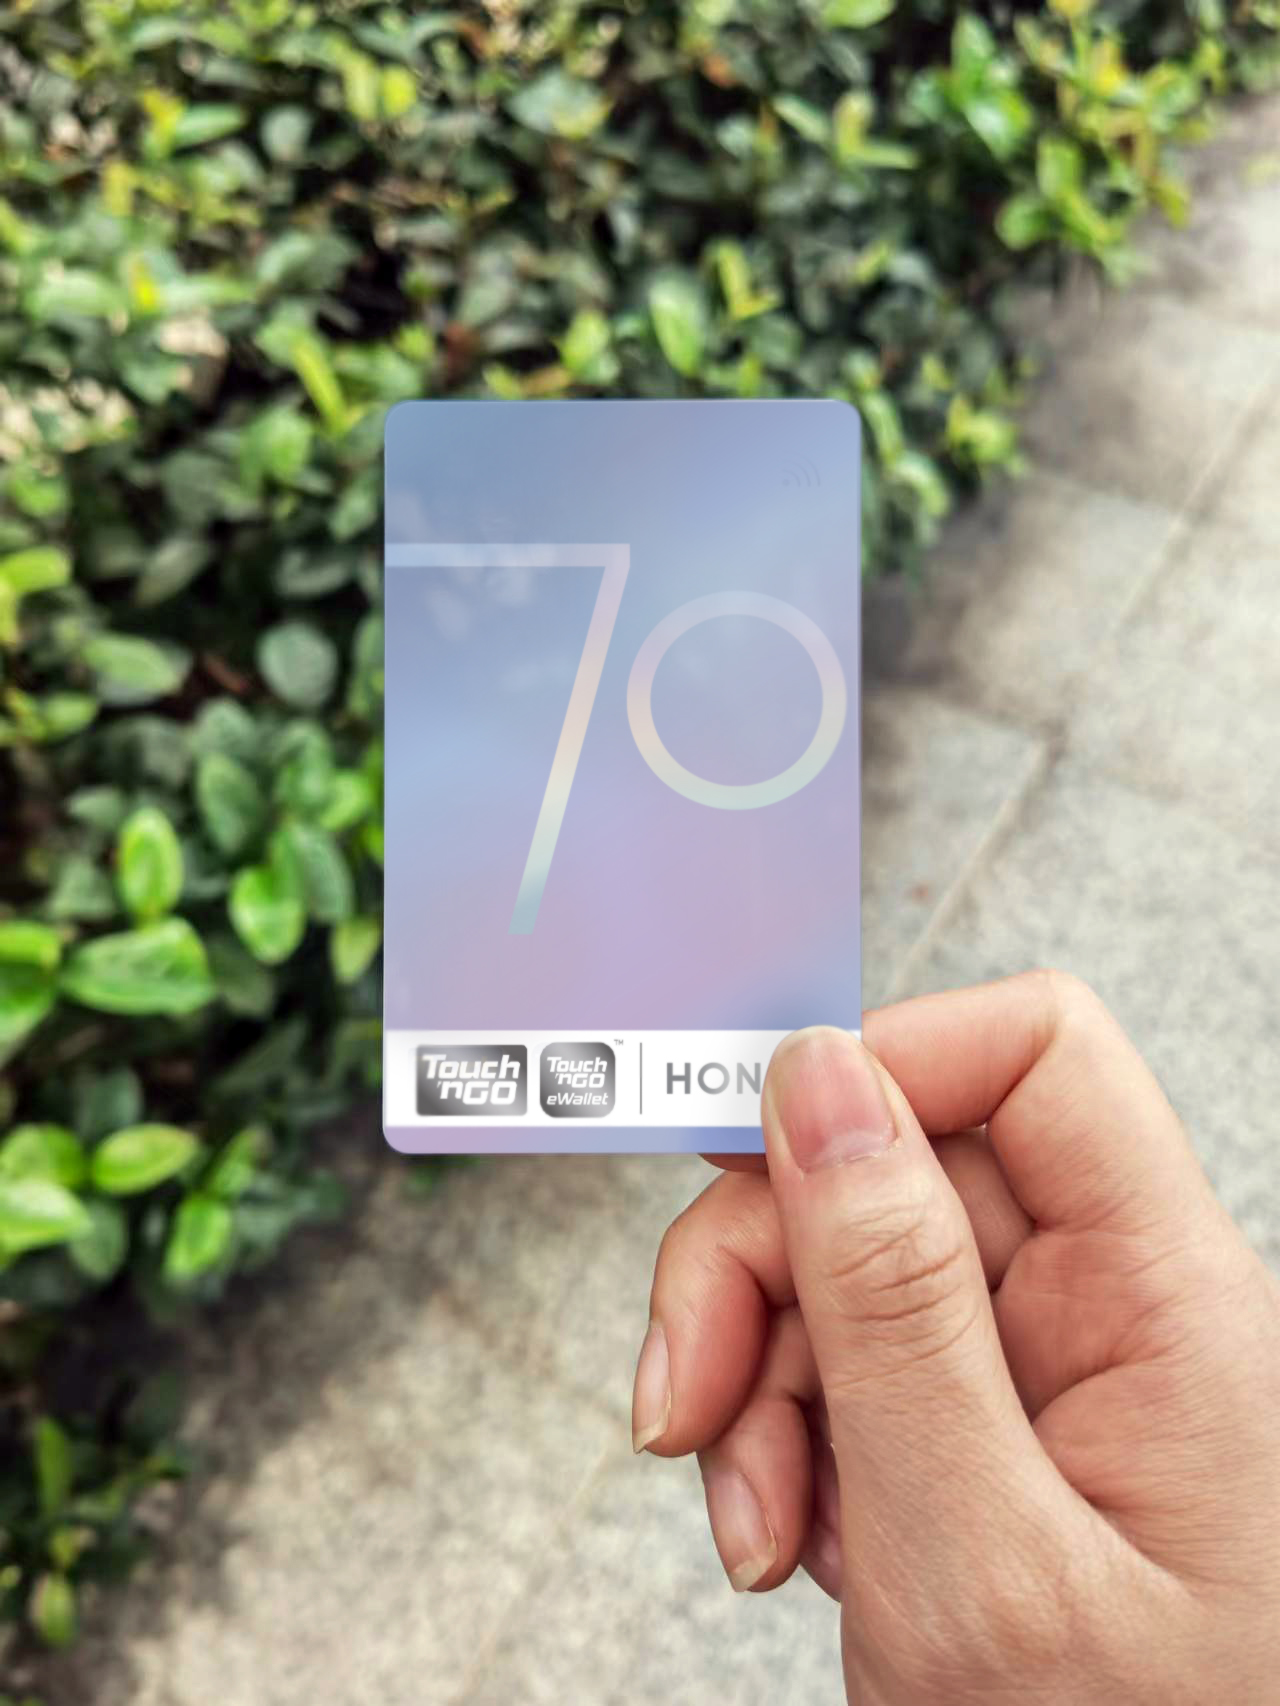 Limited Edition Enhanced Touch n Go NFC Card Image 2